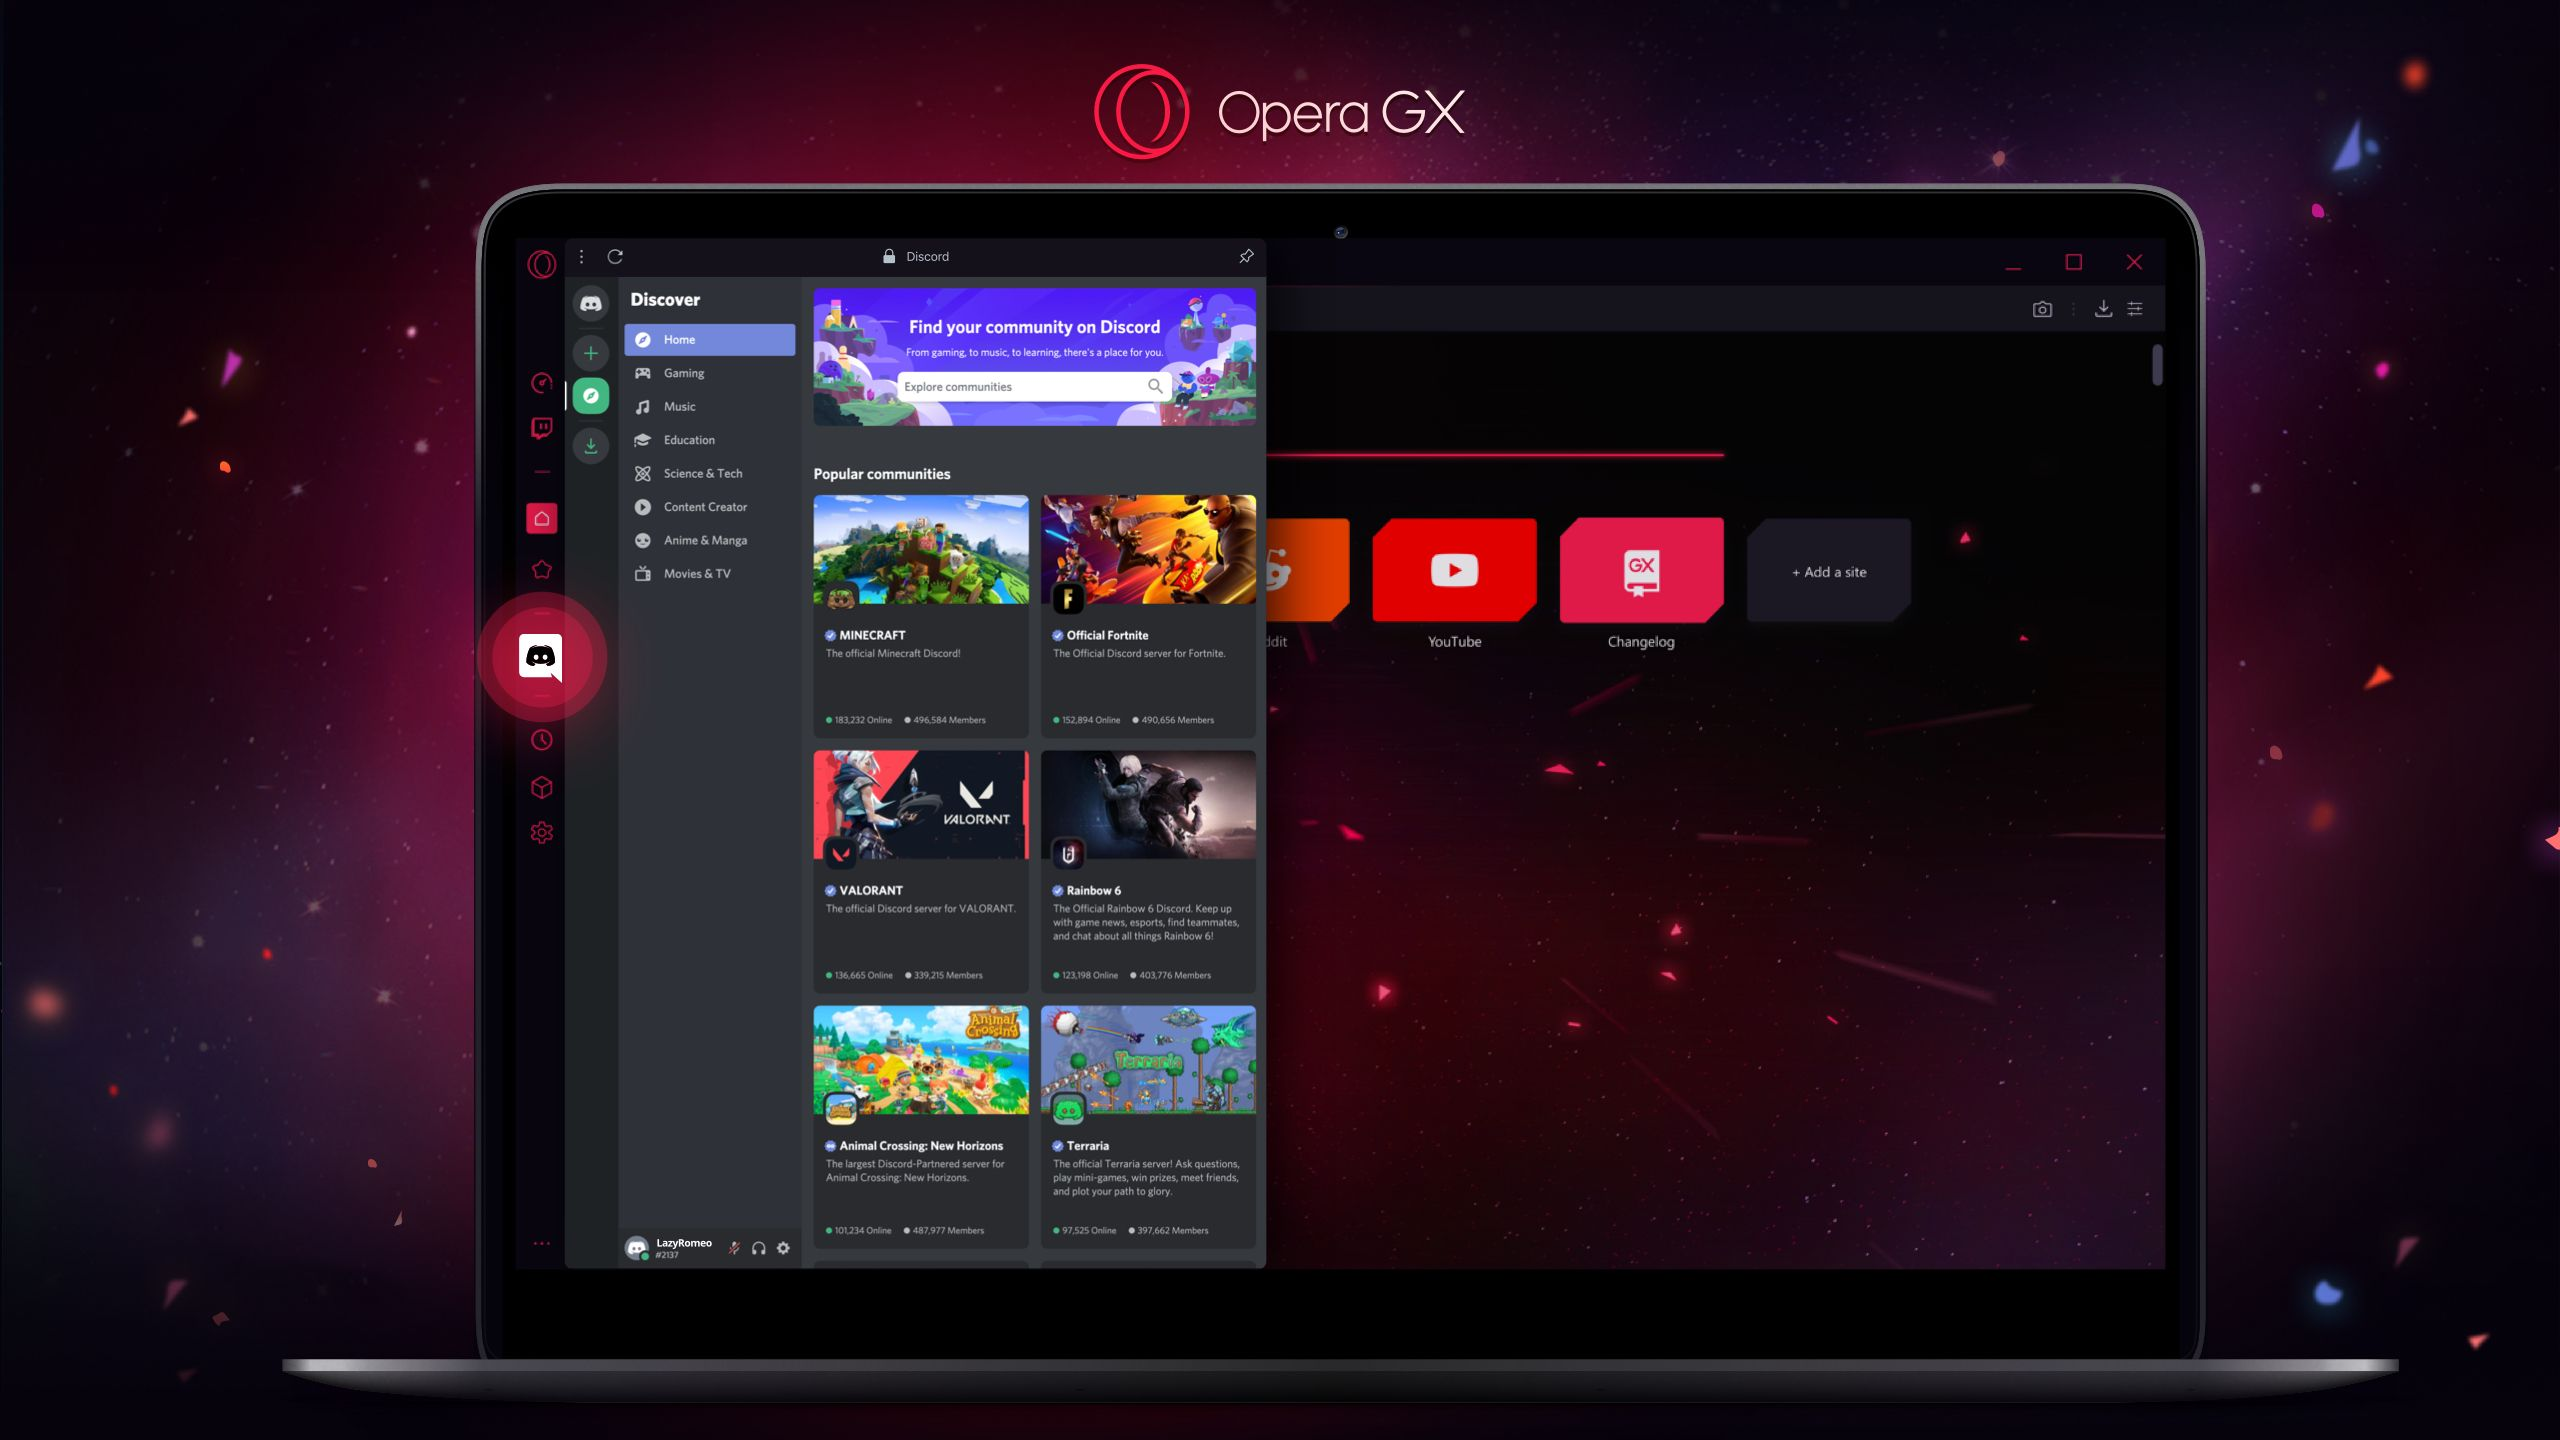 how to update opera gx